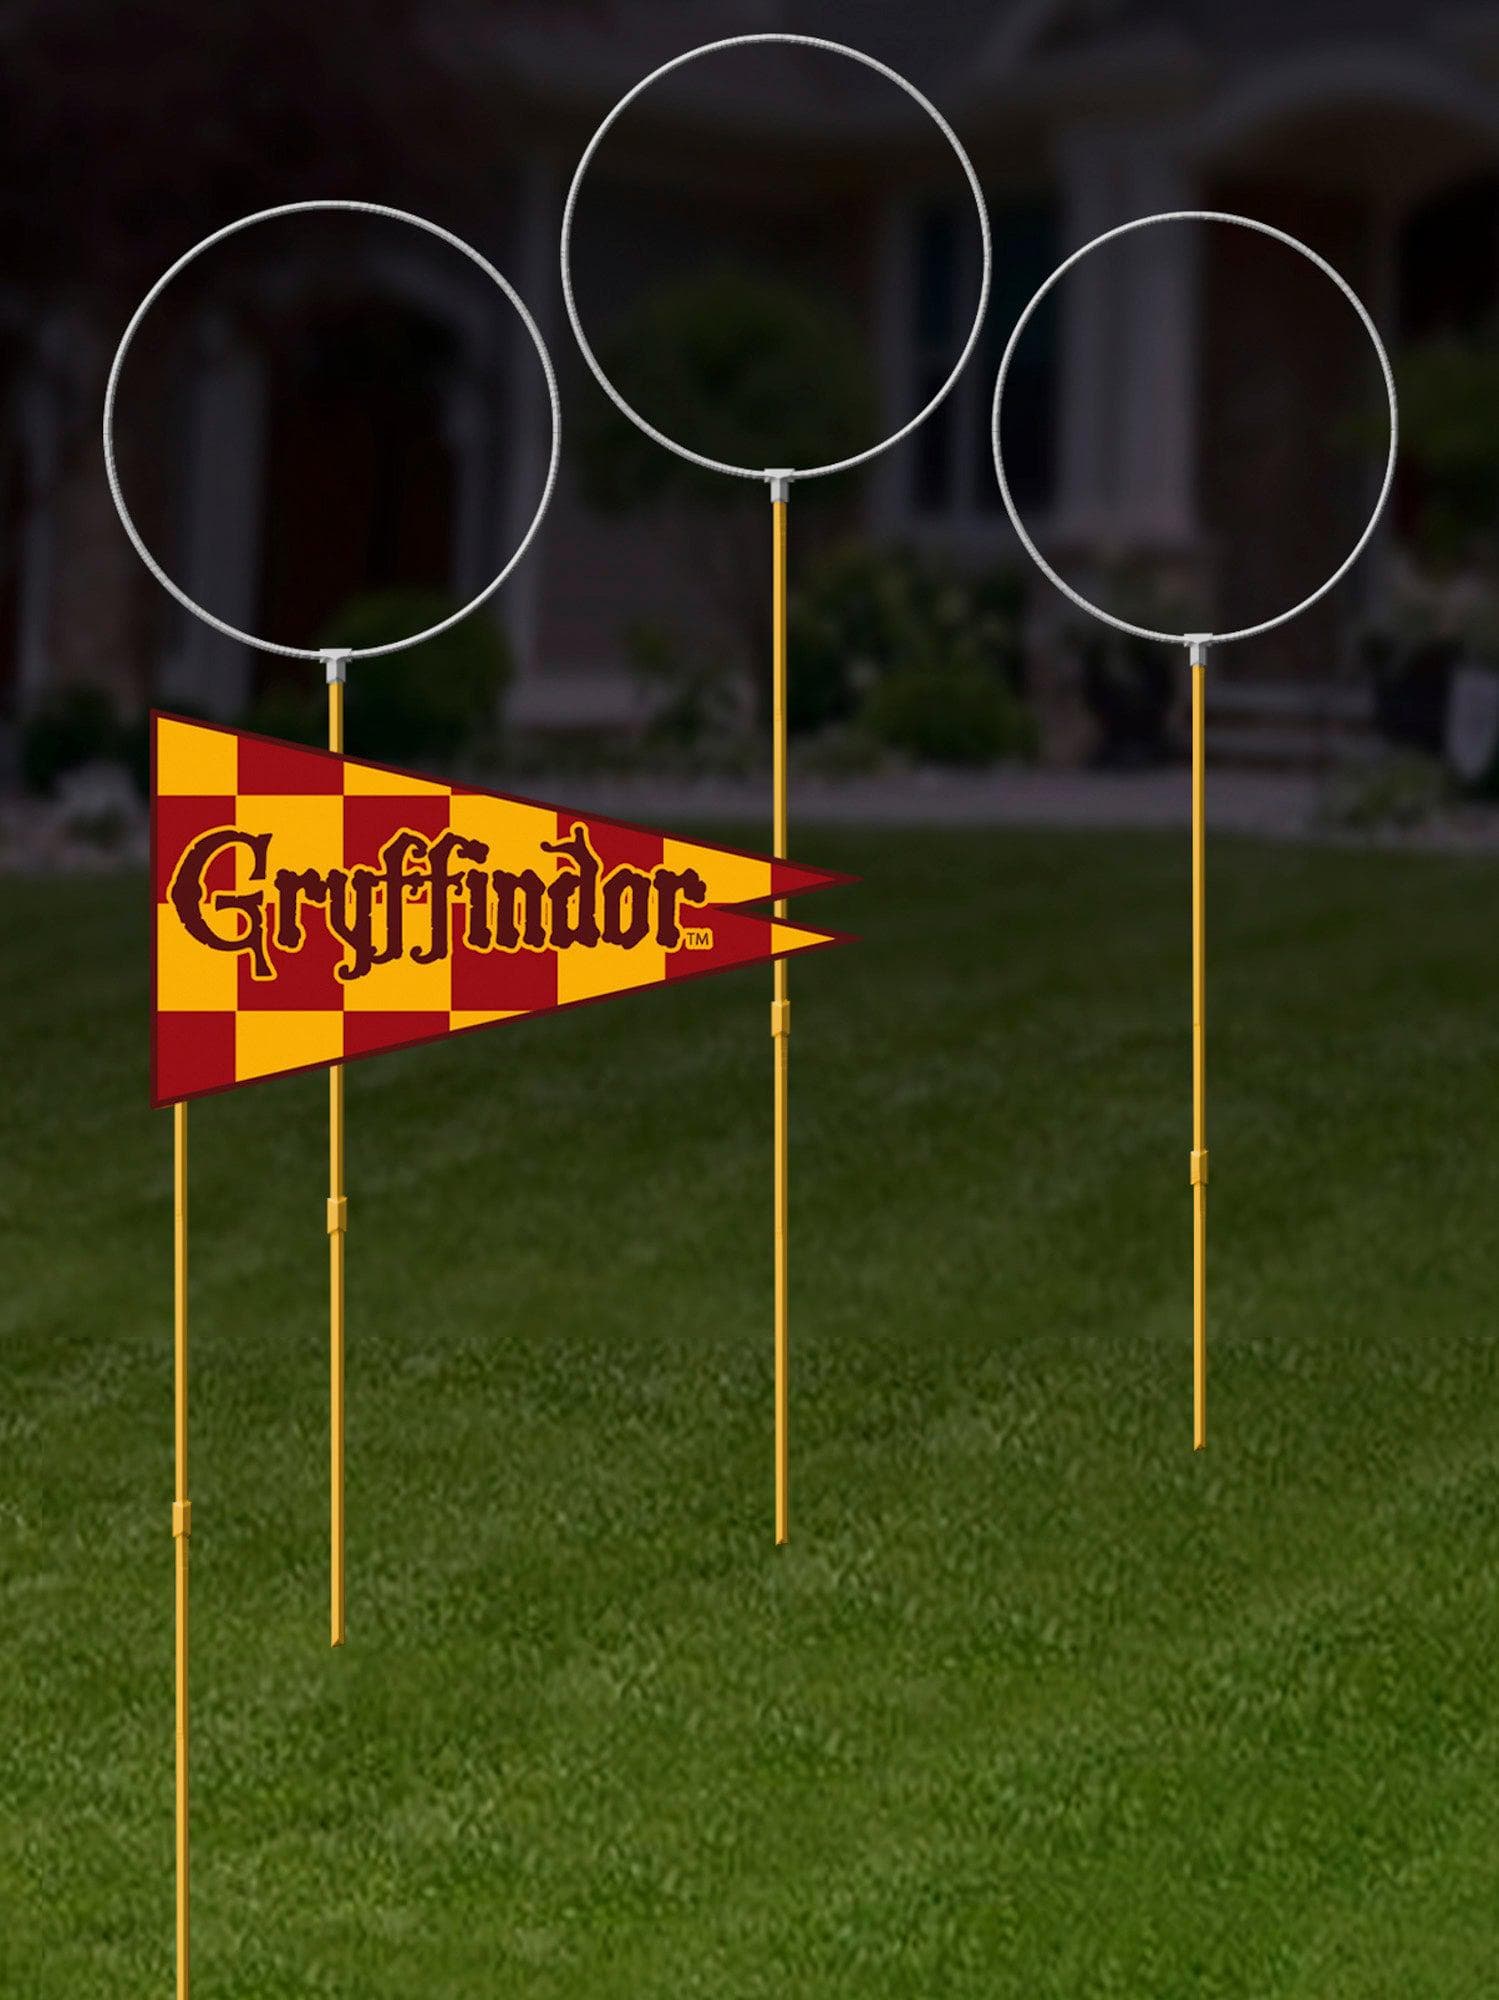 Harry Potter Quidditch Pitch Lawn Decoration - costumes.com